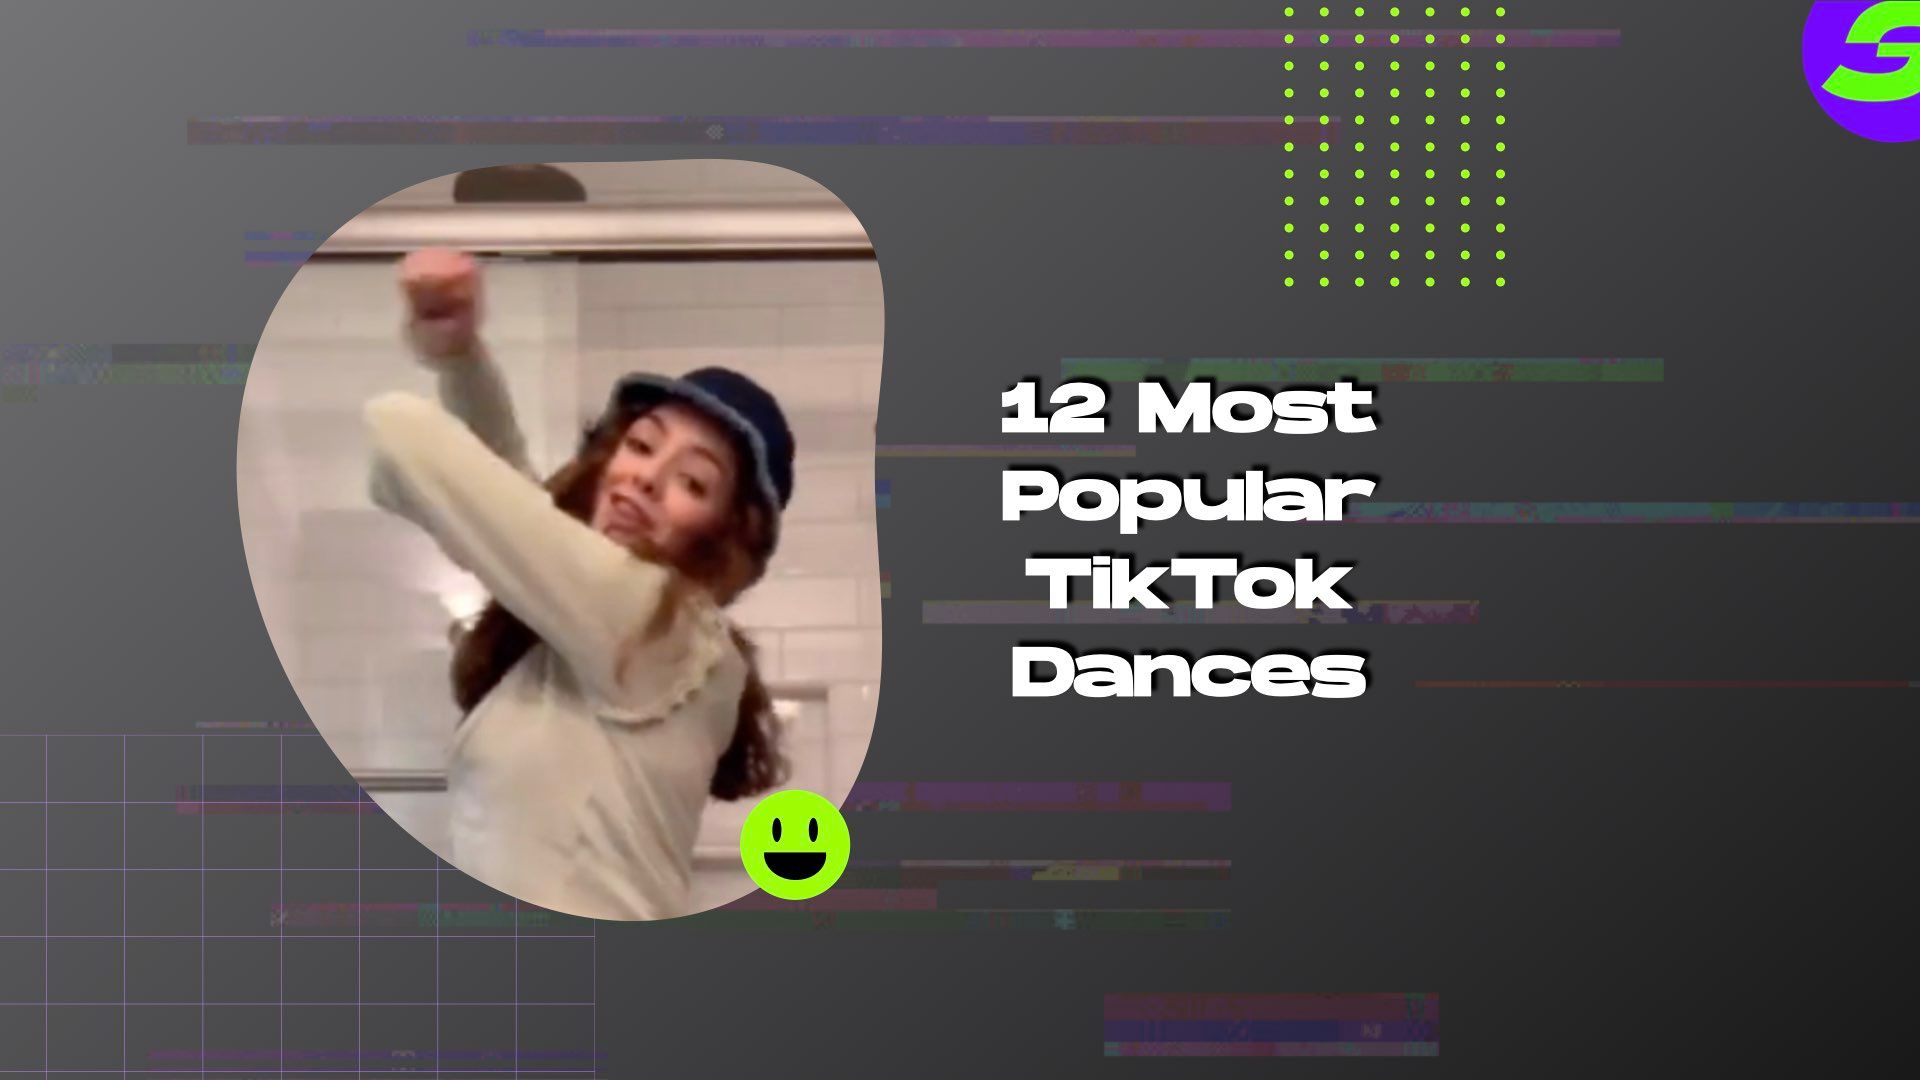 shotcut free video editor android 12 Most Popular TikTok Dances